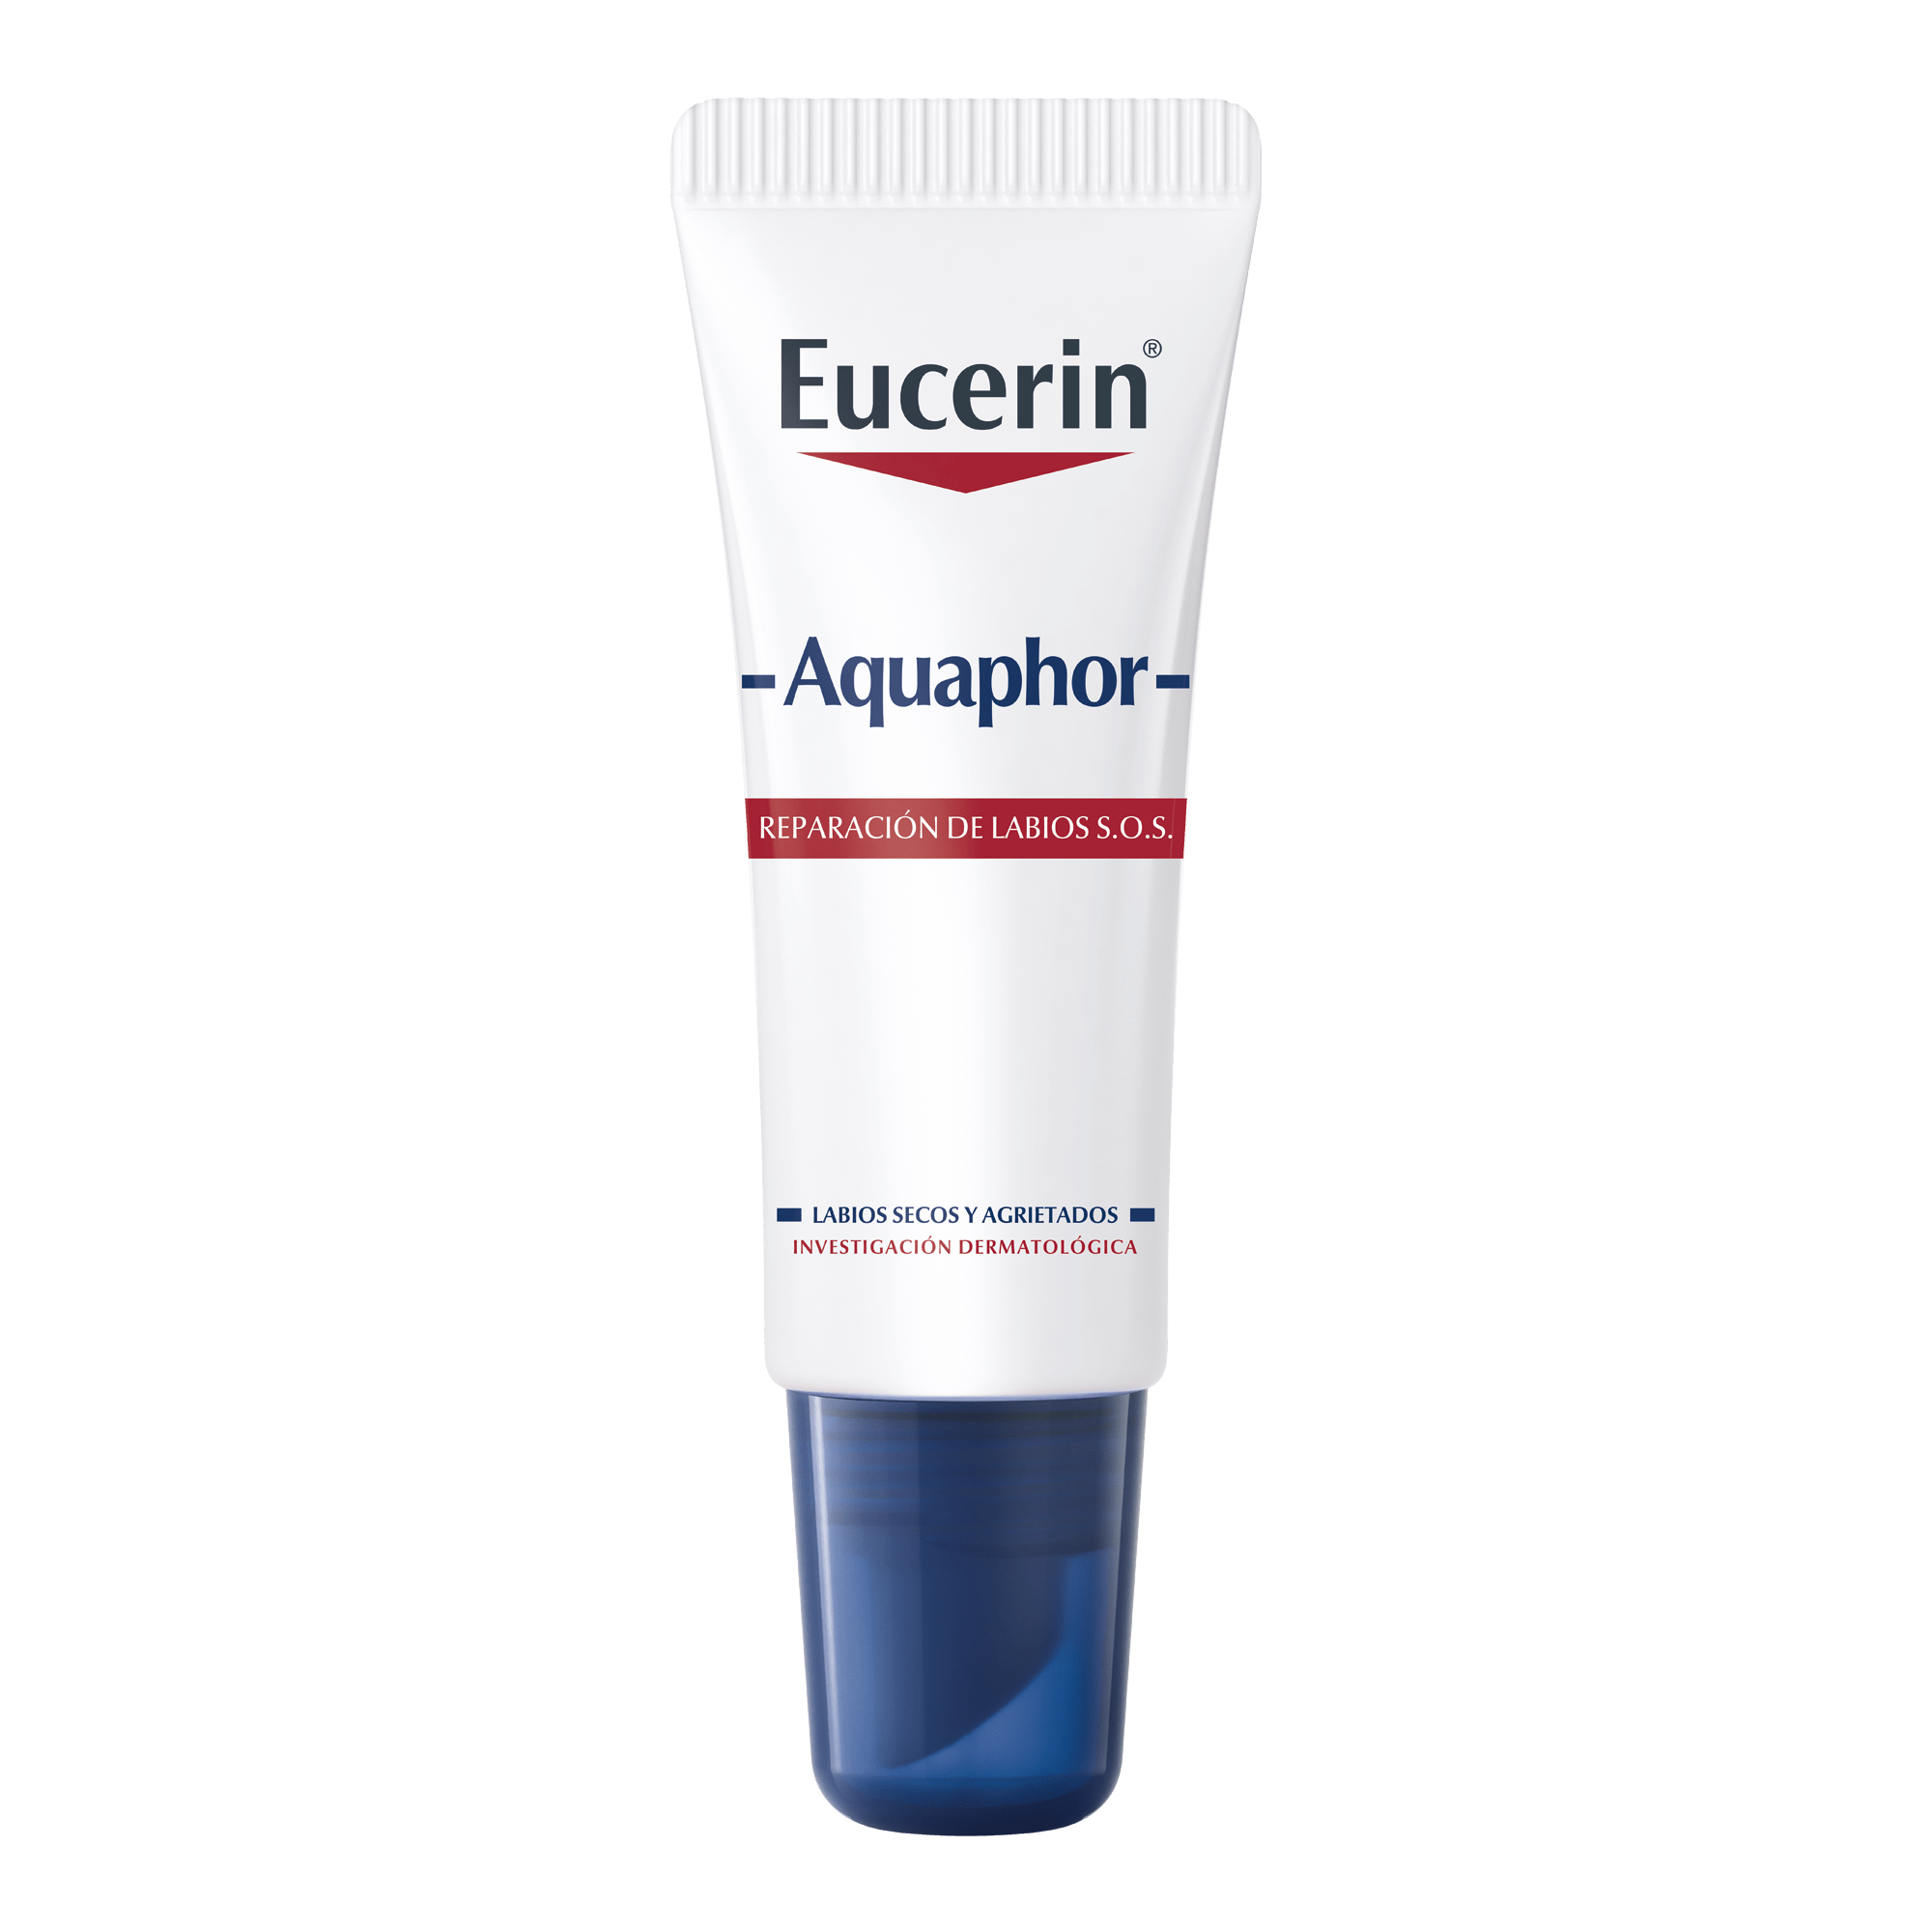 Eucerin Aquaphor Reparacion de Labios S.O.S (10ml)